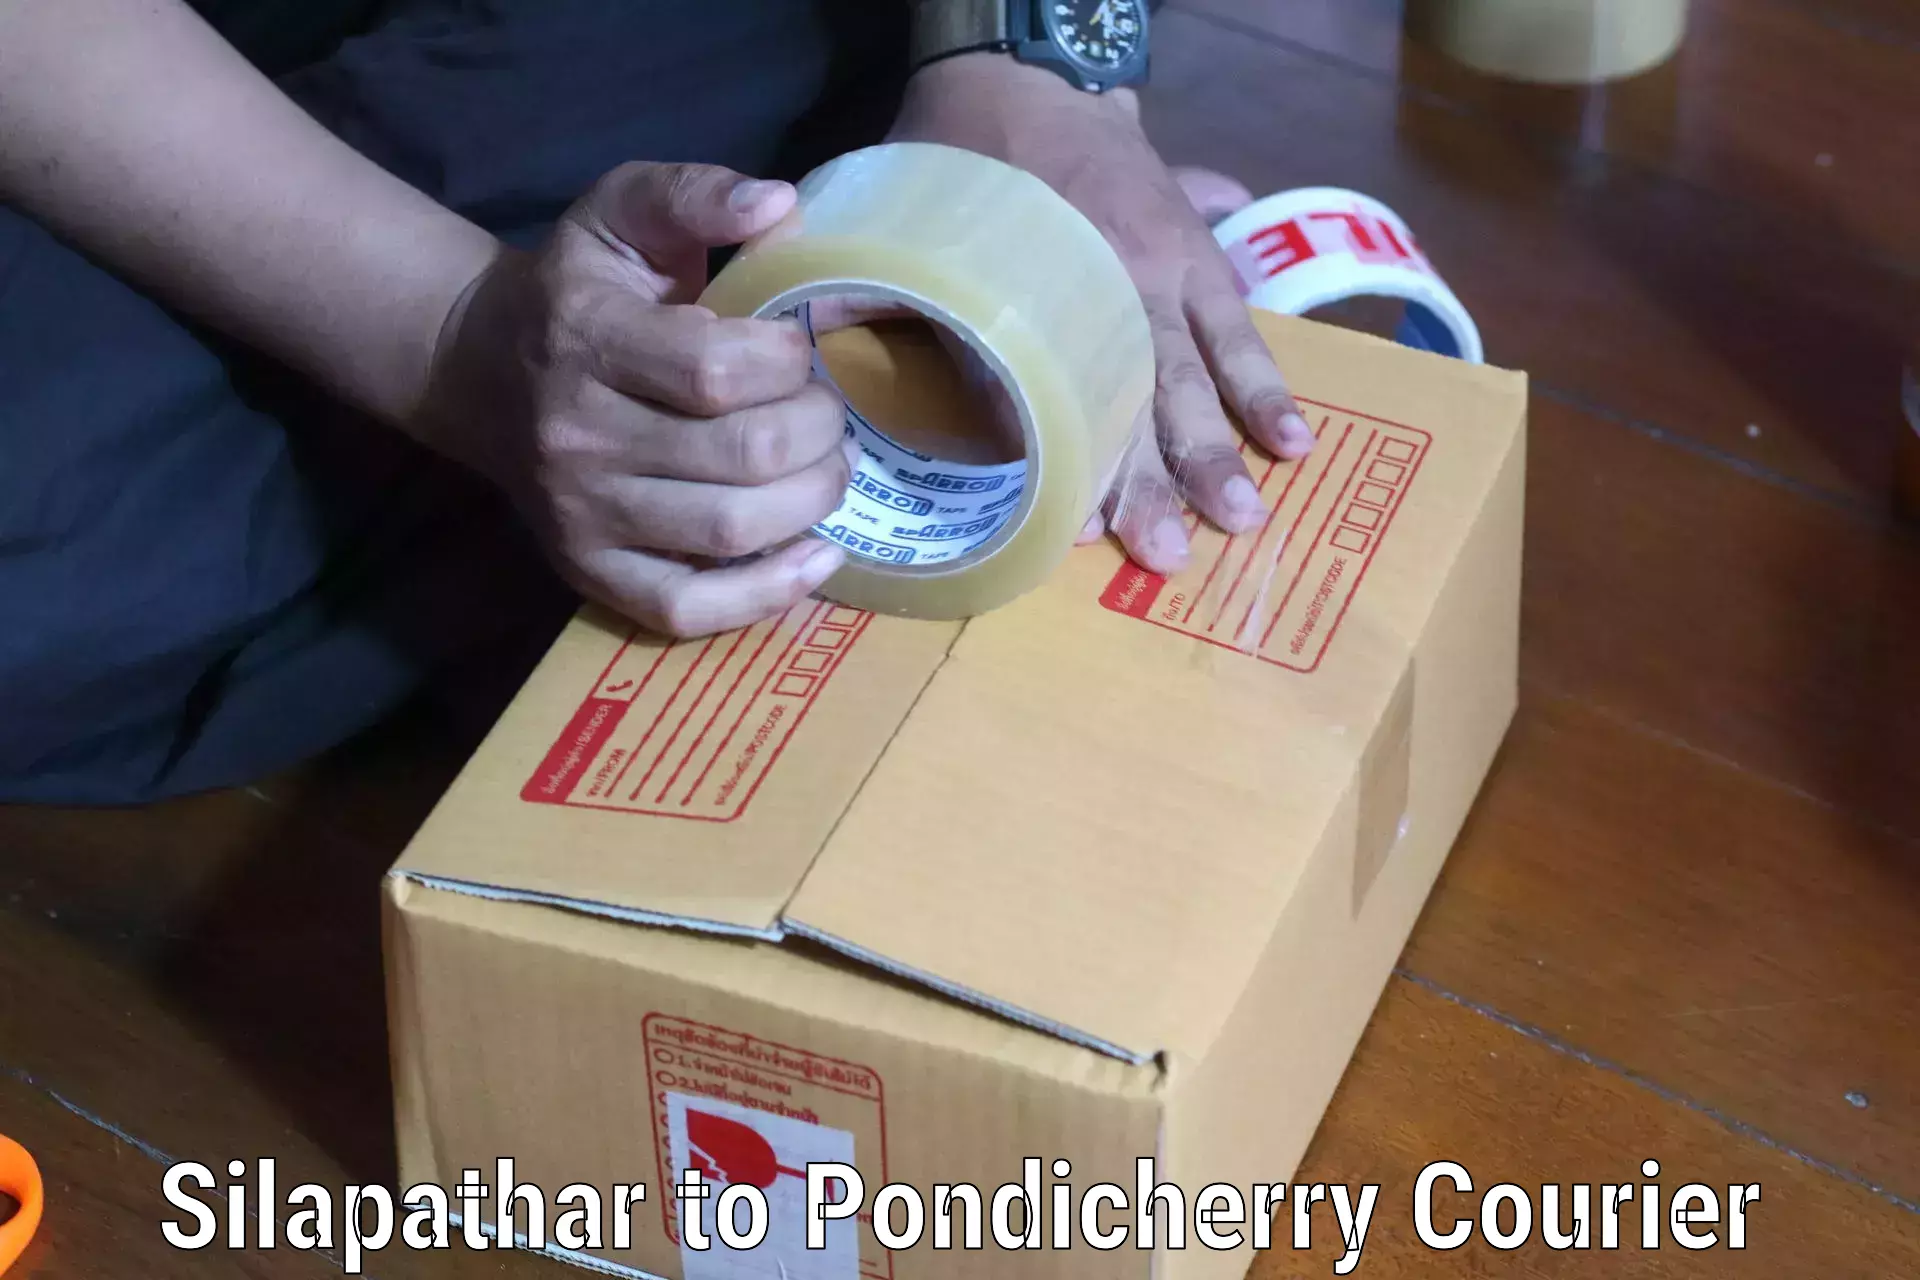 International parcel service Silapathar to Pondicherry